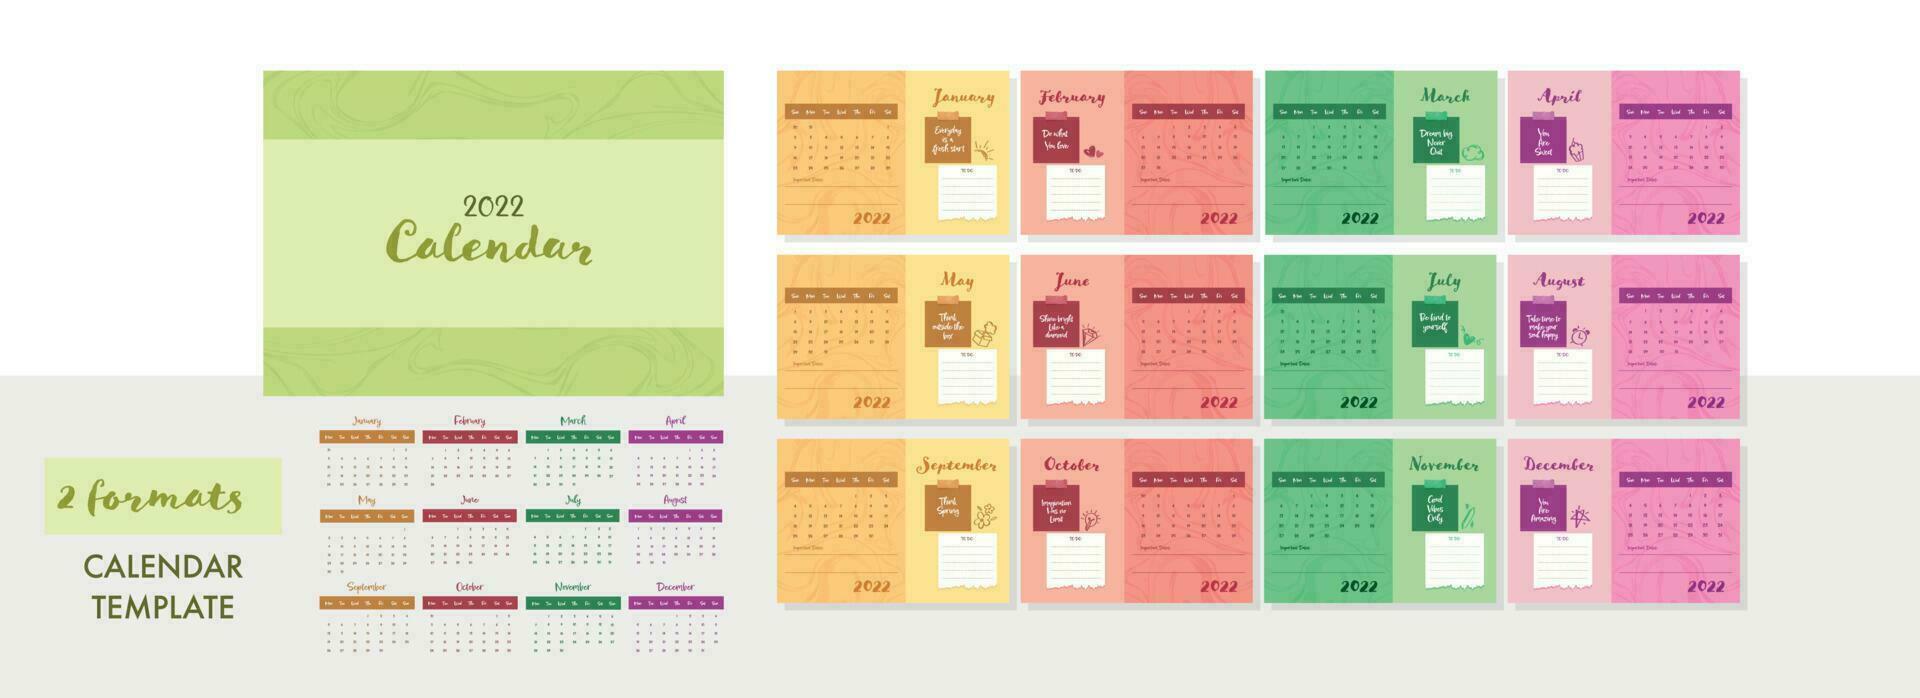 årlig skrivbord kalender design. vektor